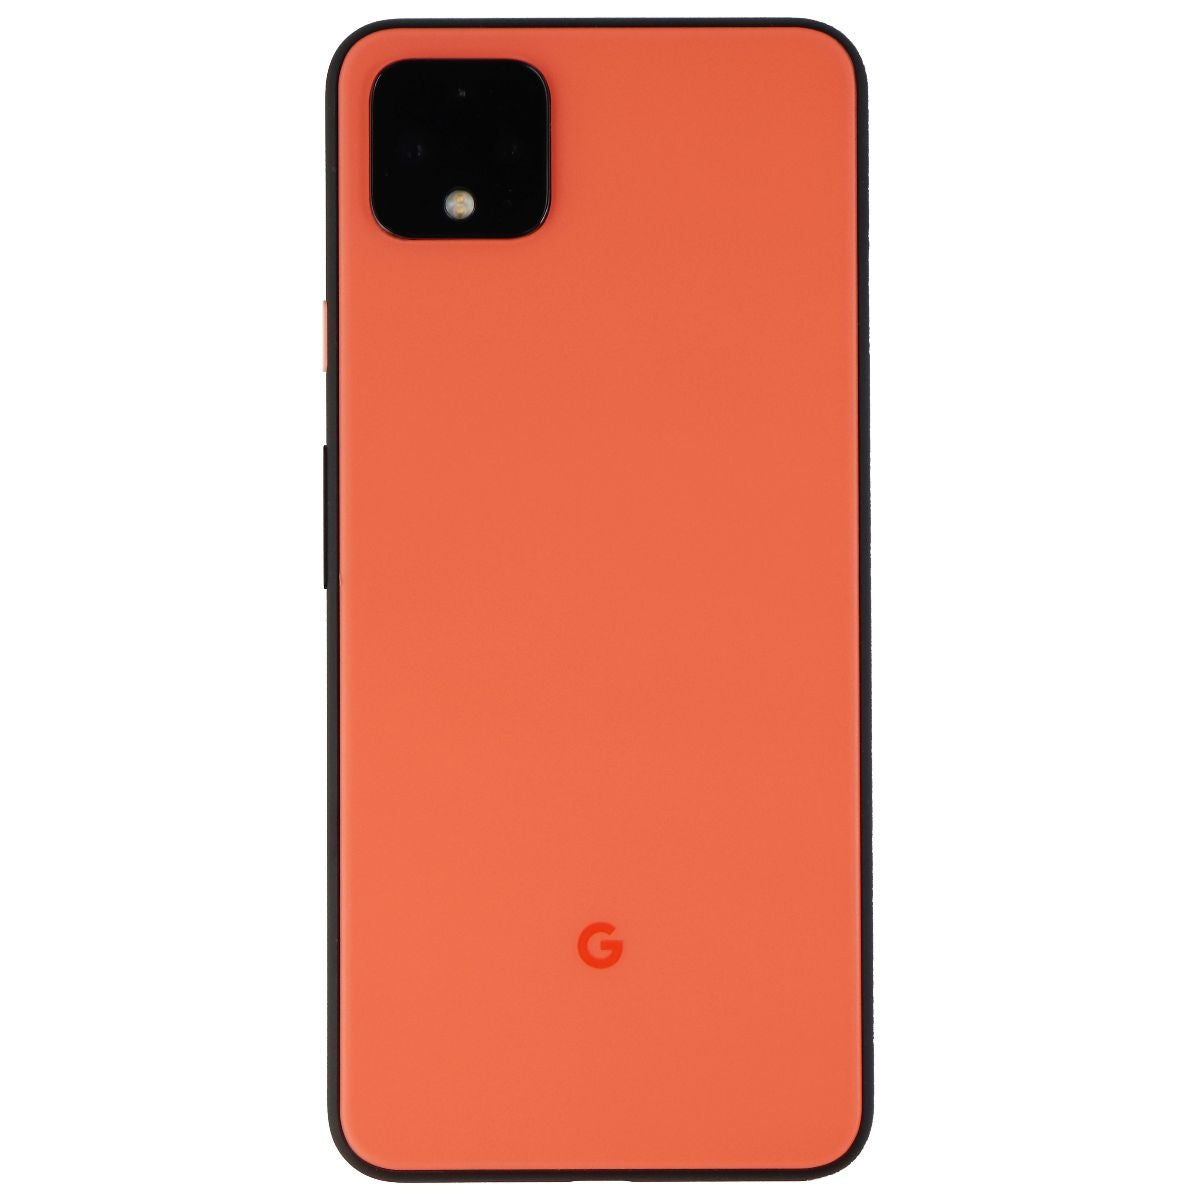 Google Pixel 4 XL (6.3-in) Smartphone (G020J) GSM + CDMA - 64GB / Oh So Orange Cell Phones & Smartphones Google    - Simple Cell Bulk Wholesale Pricing - USA Seller